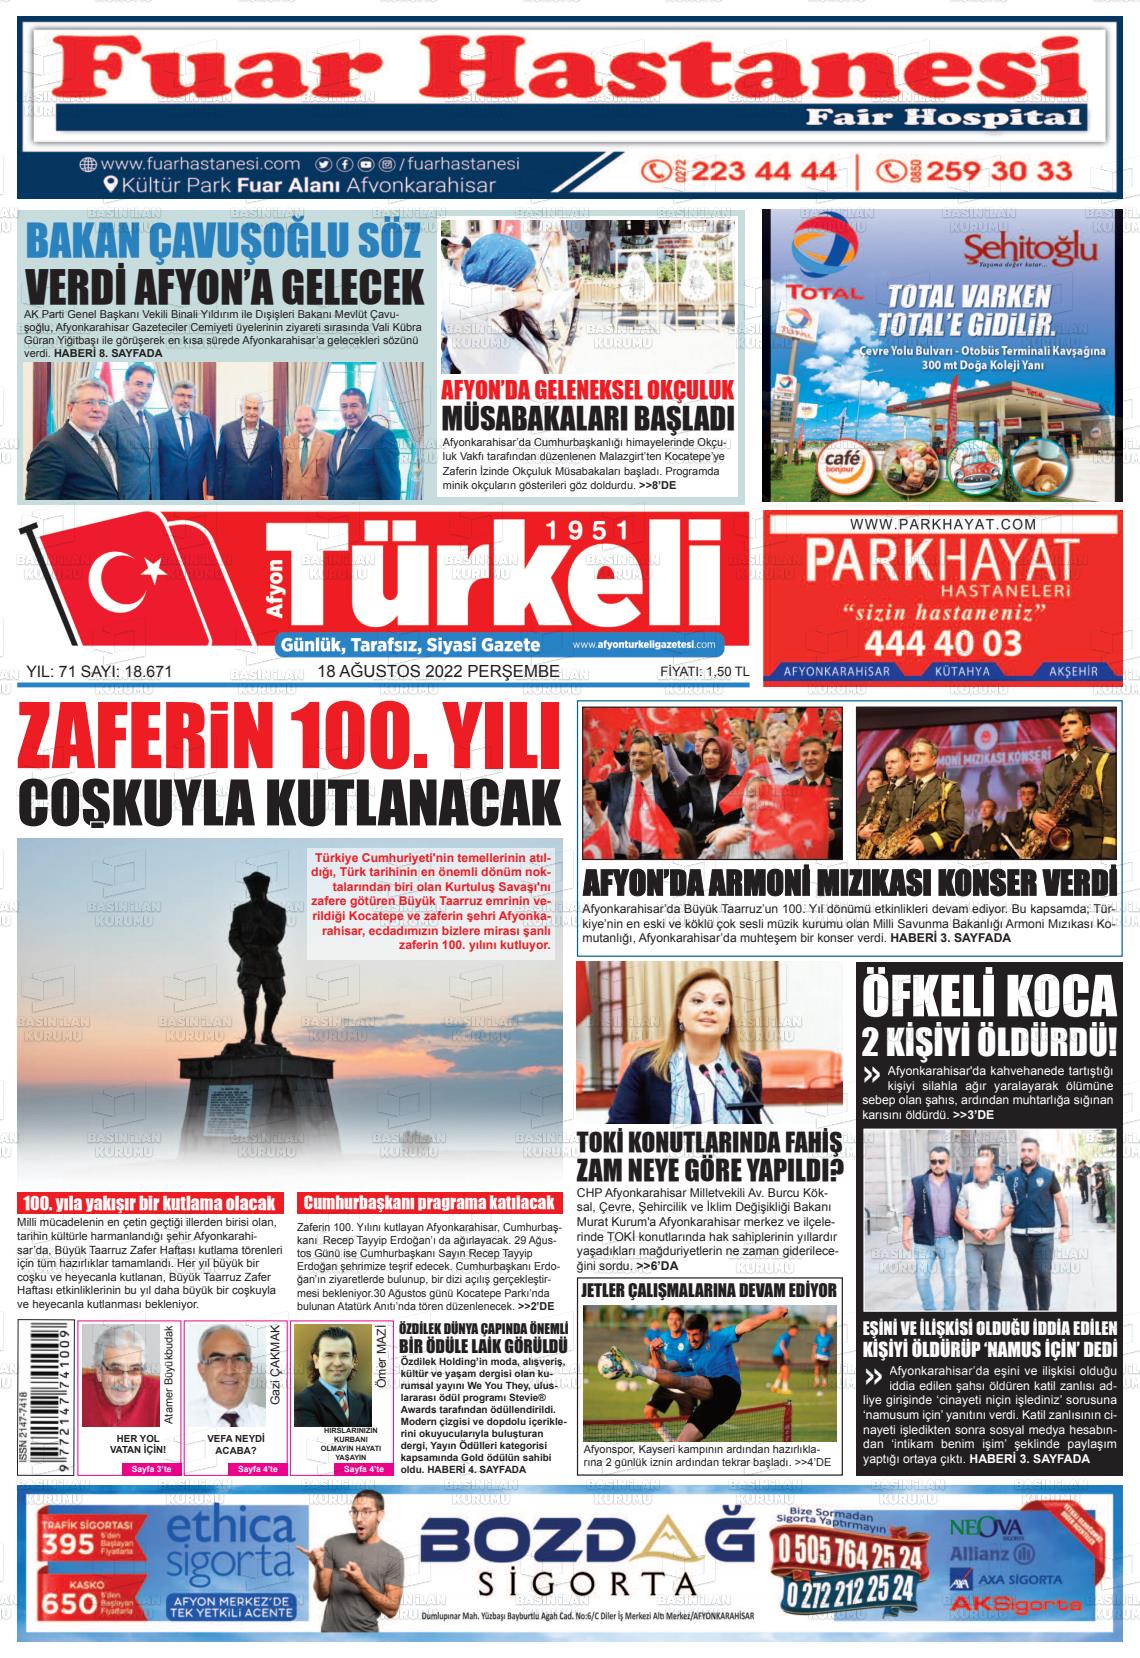 18 Ağustos 2022 Afyon Türkeli Gazete Manşeti